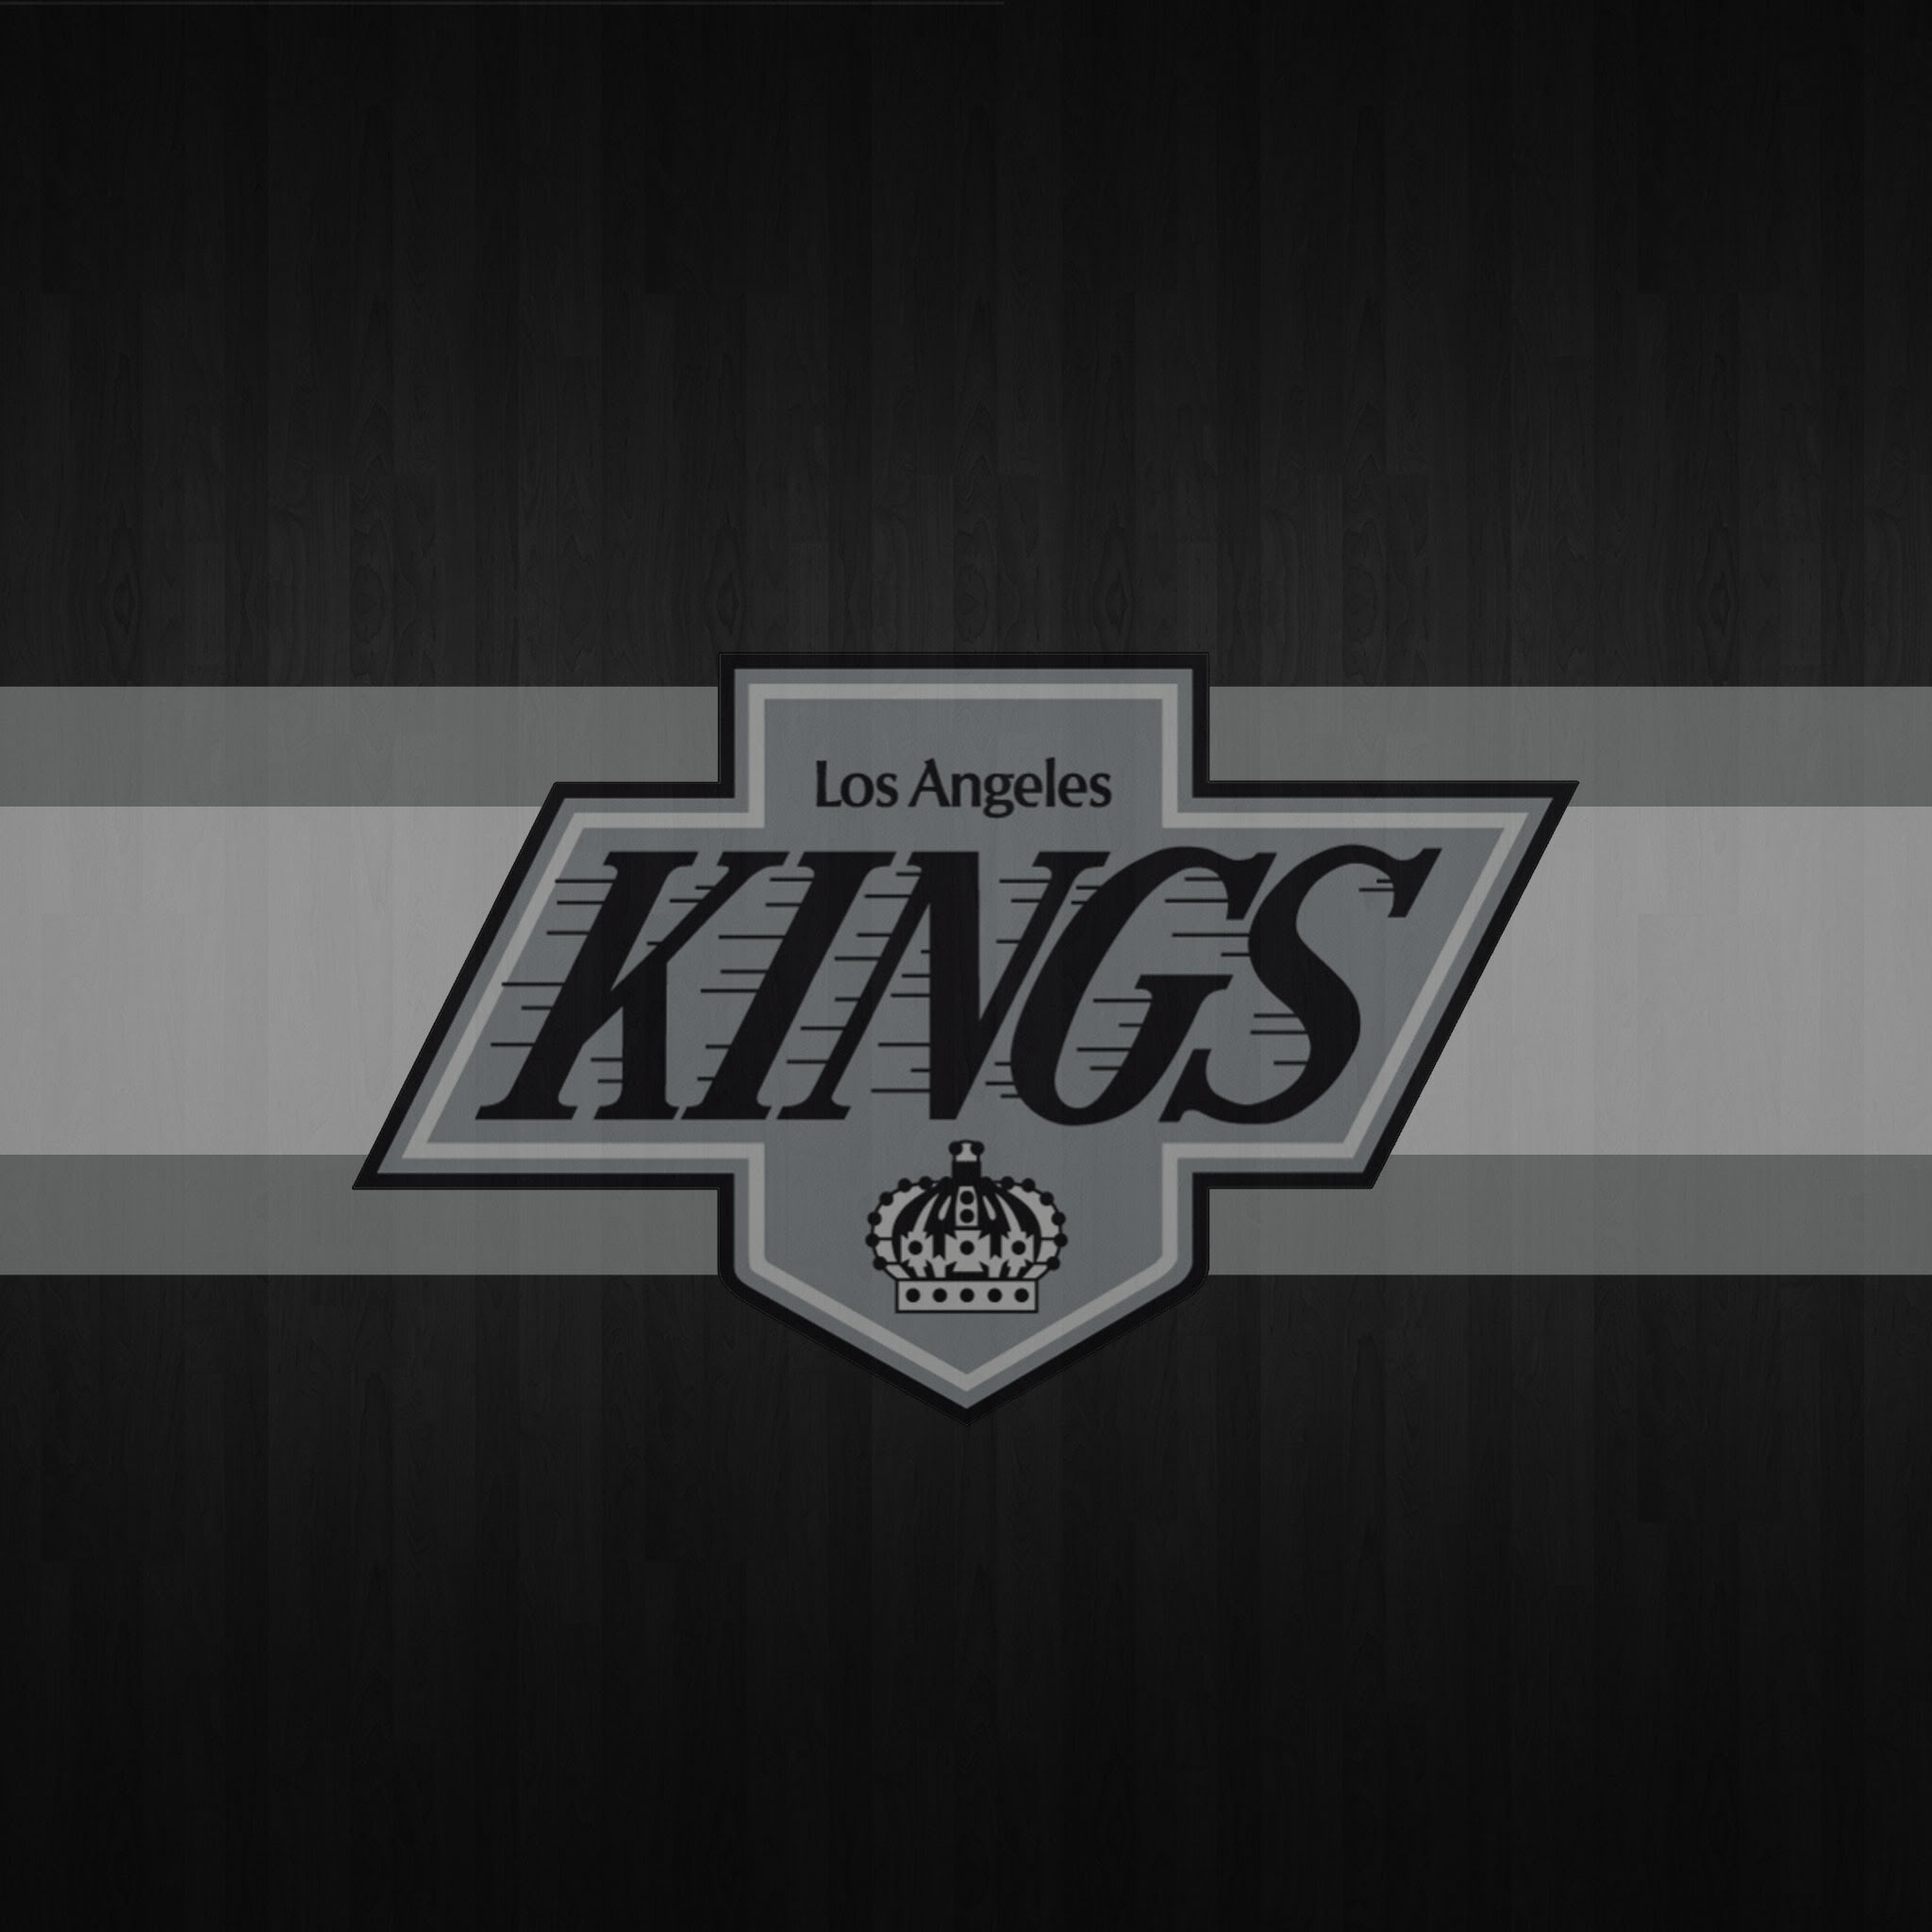 LA Kings wallpapers for desktop iPhone iPad   HFBoards